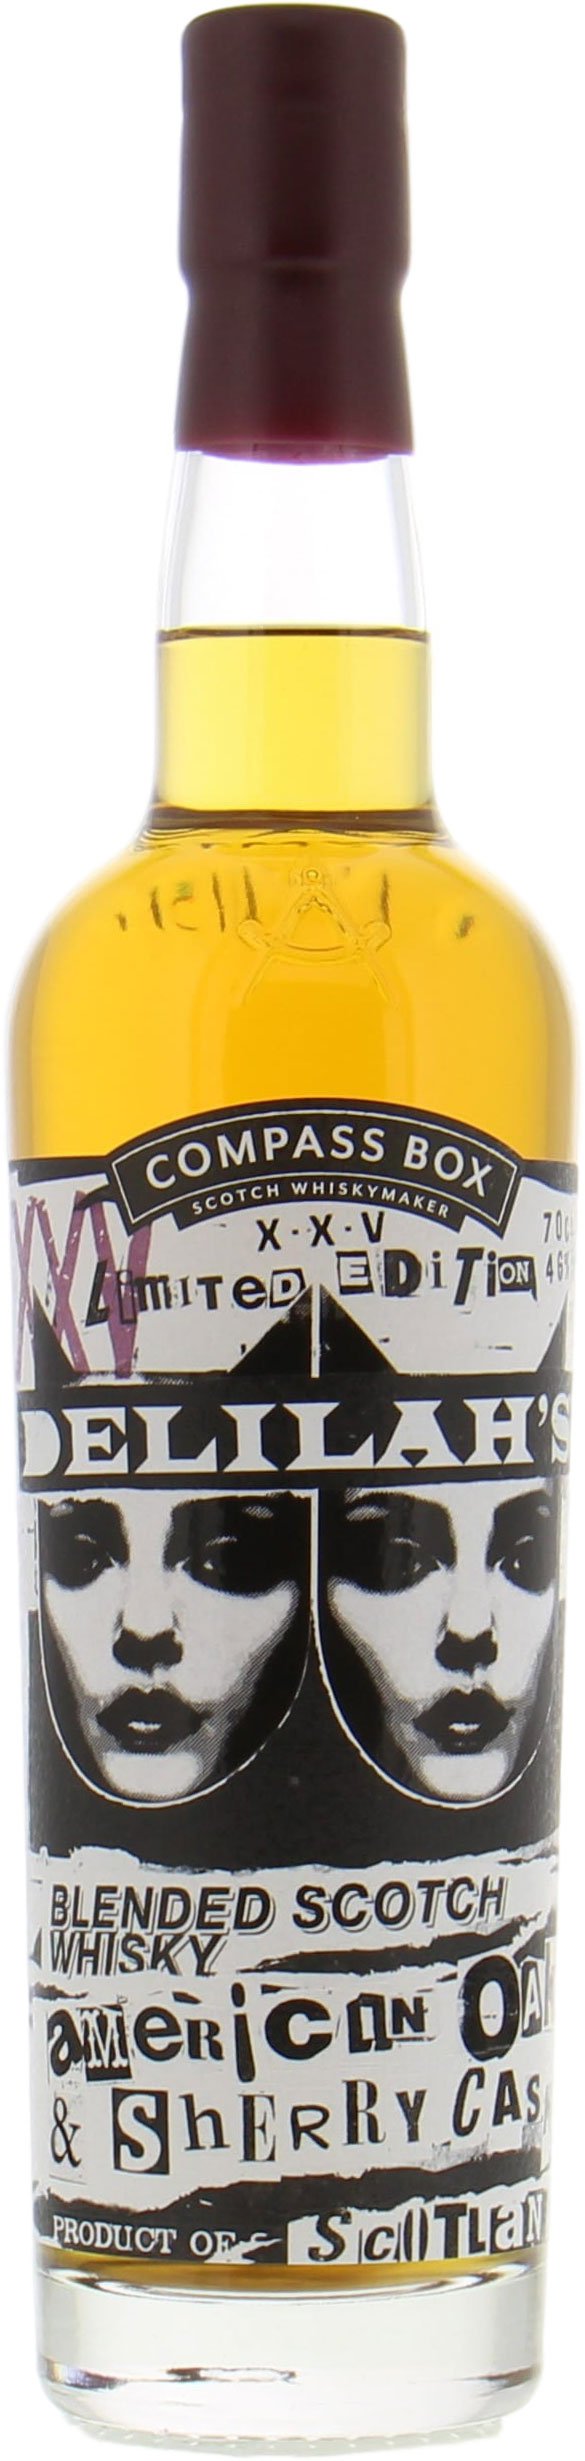 Compass Box - Delilah's XXV 46% NV